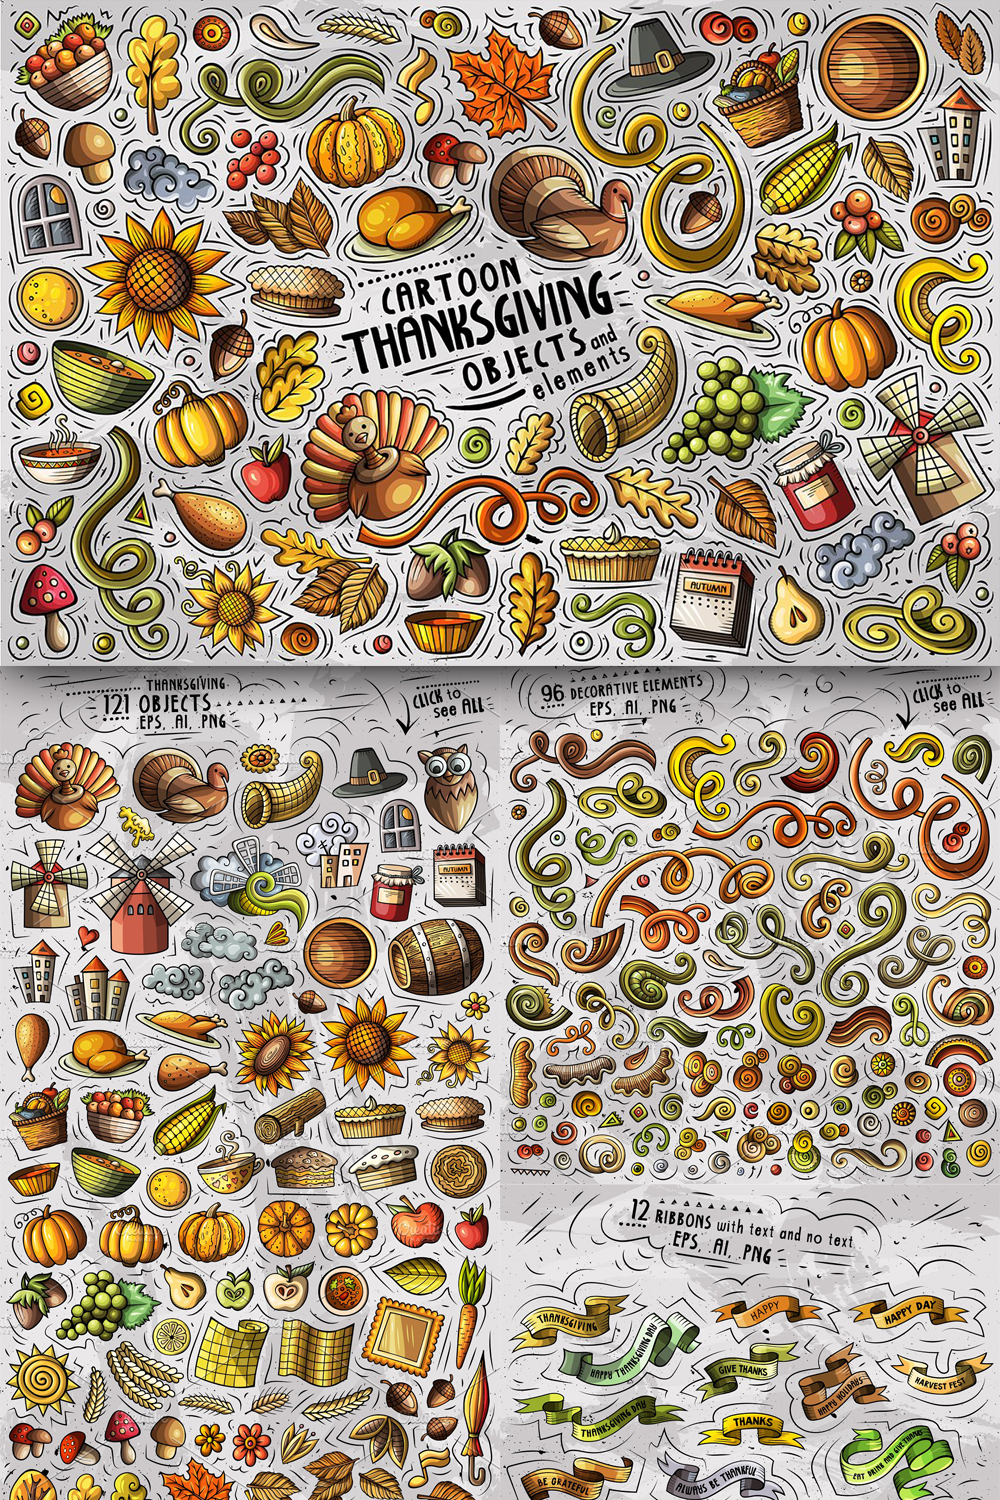 Thanksgiving objects pinterest.